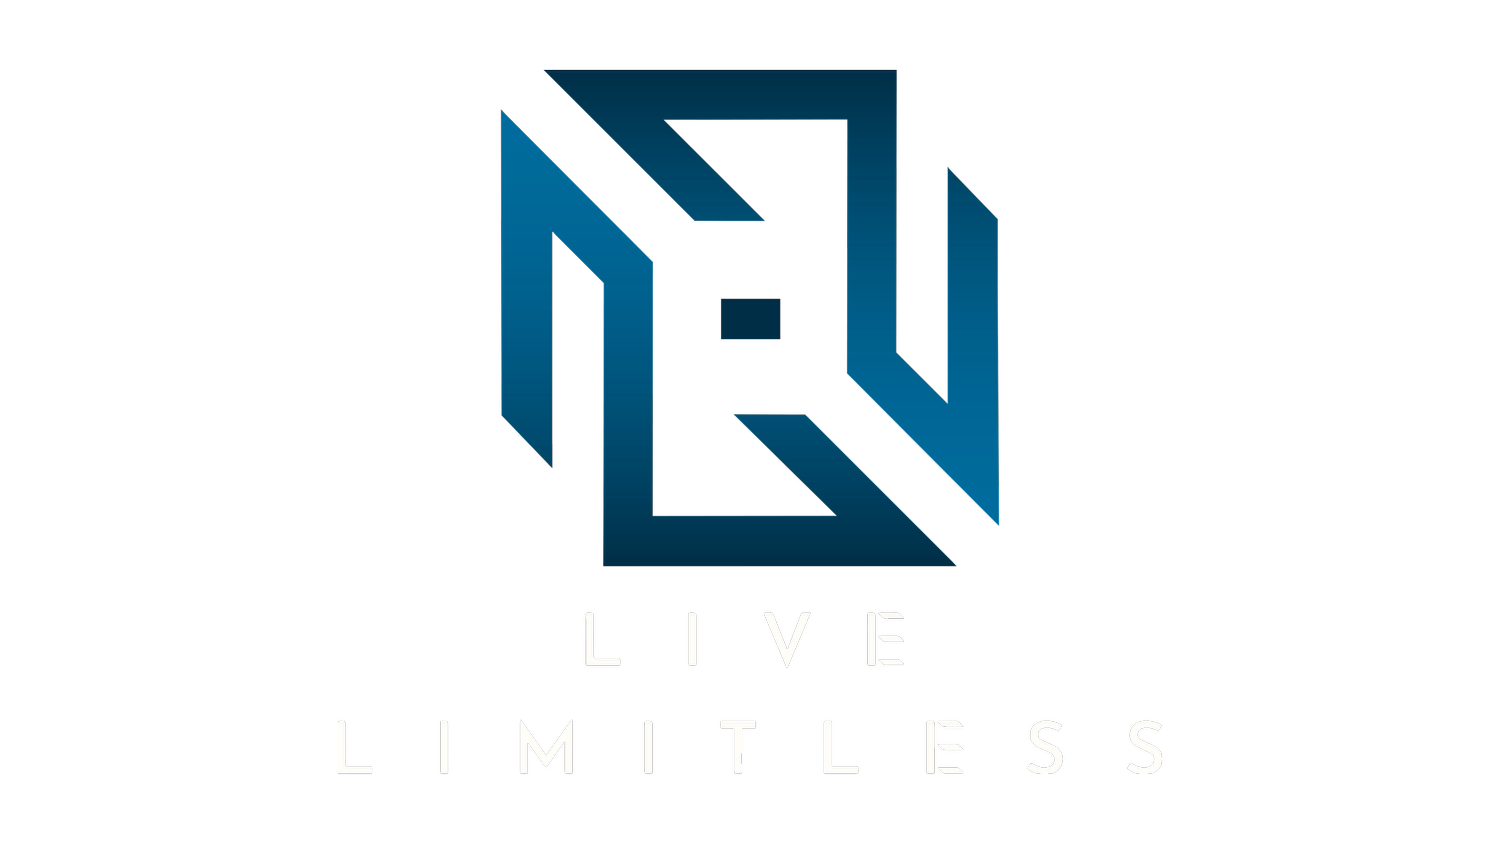 Live Limitless